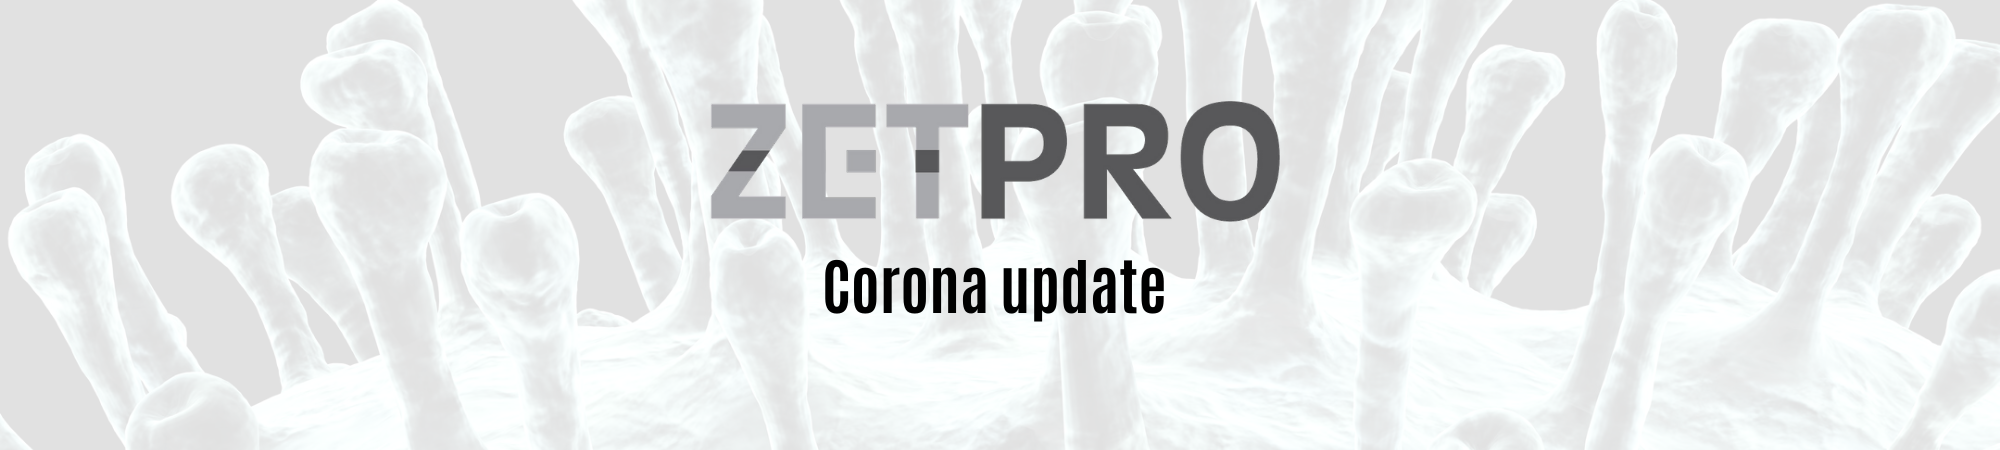 Zetpro corona update 